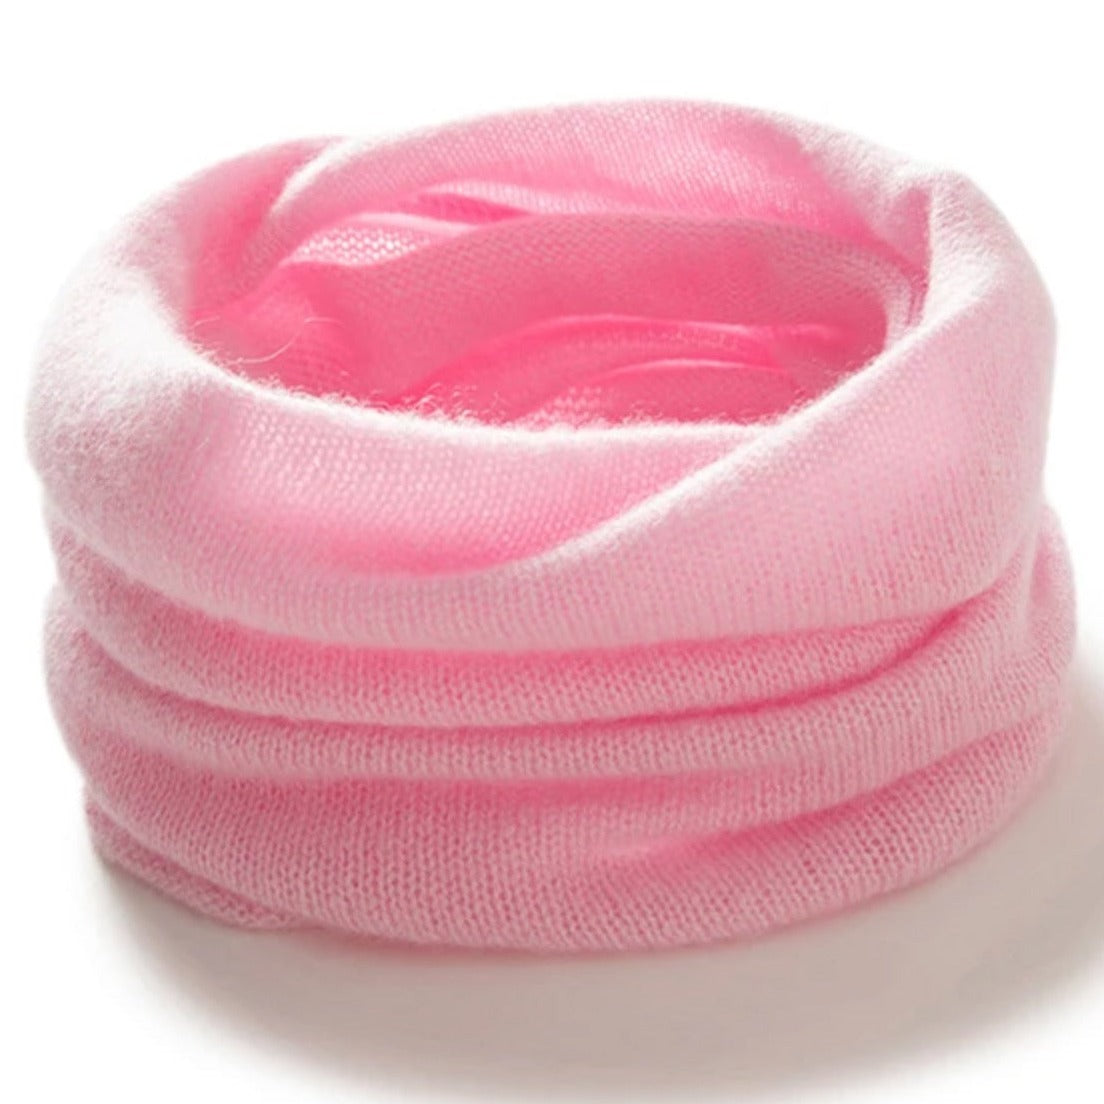 Pink Natural 100% cashmere neck warmer, shop Canada cashmere clothes, scarves, shawls